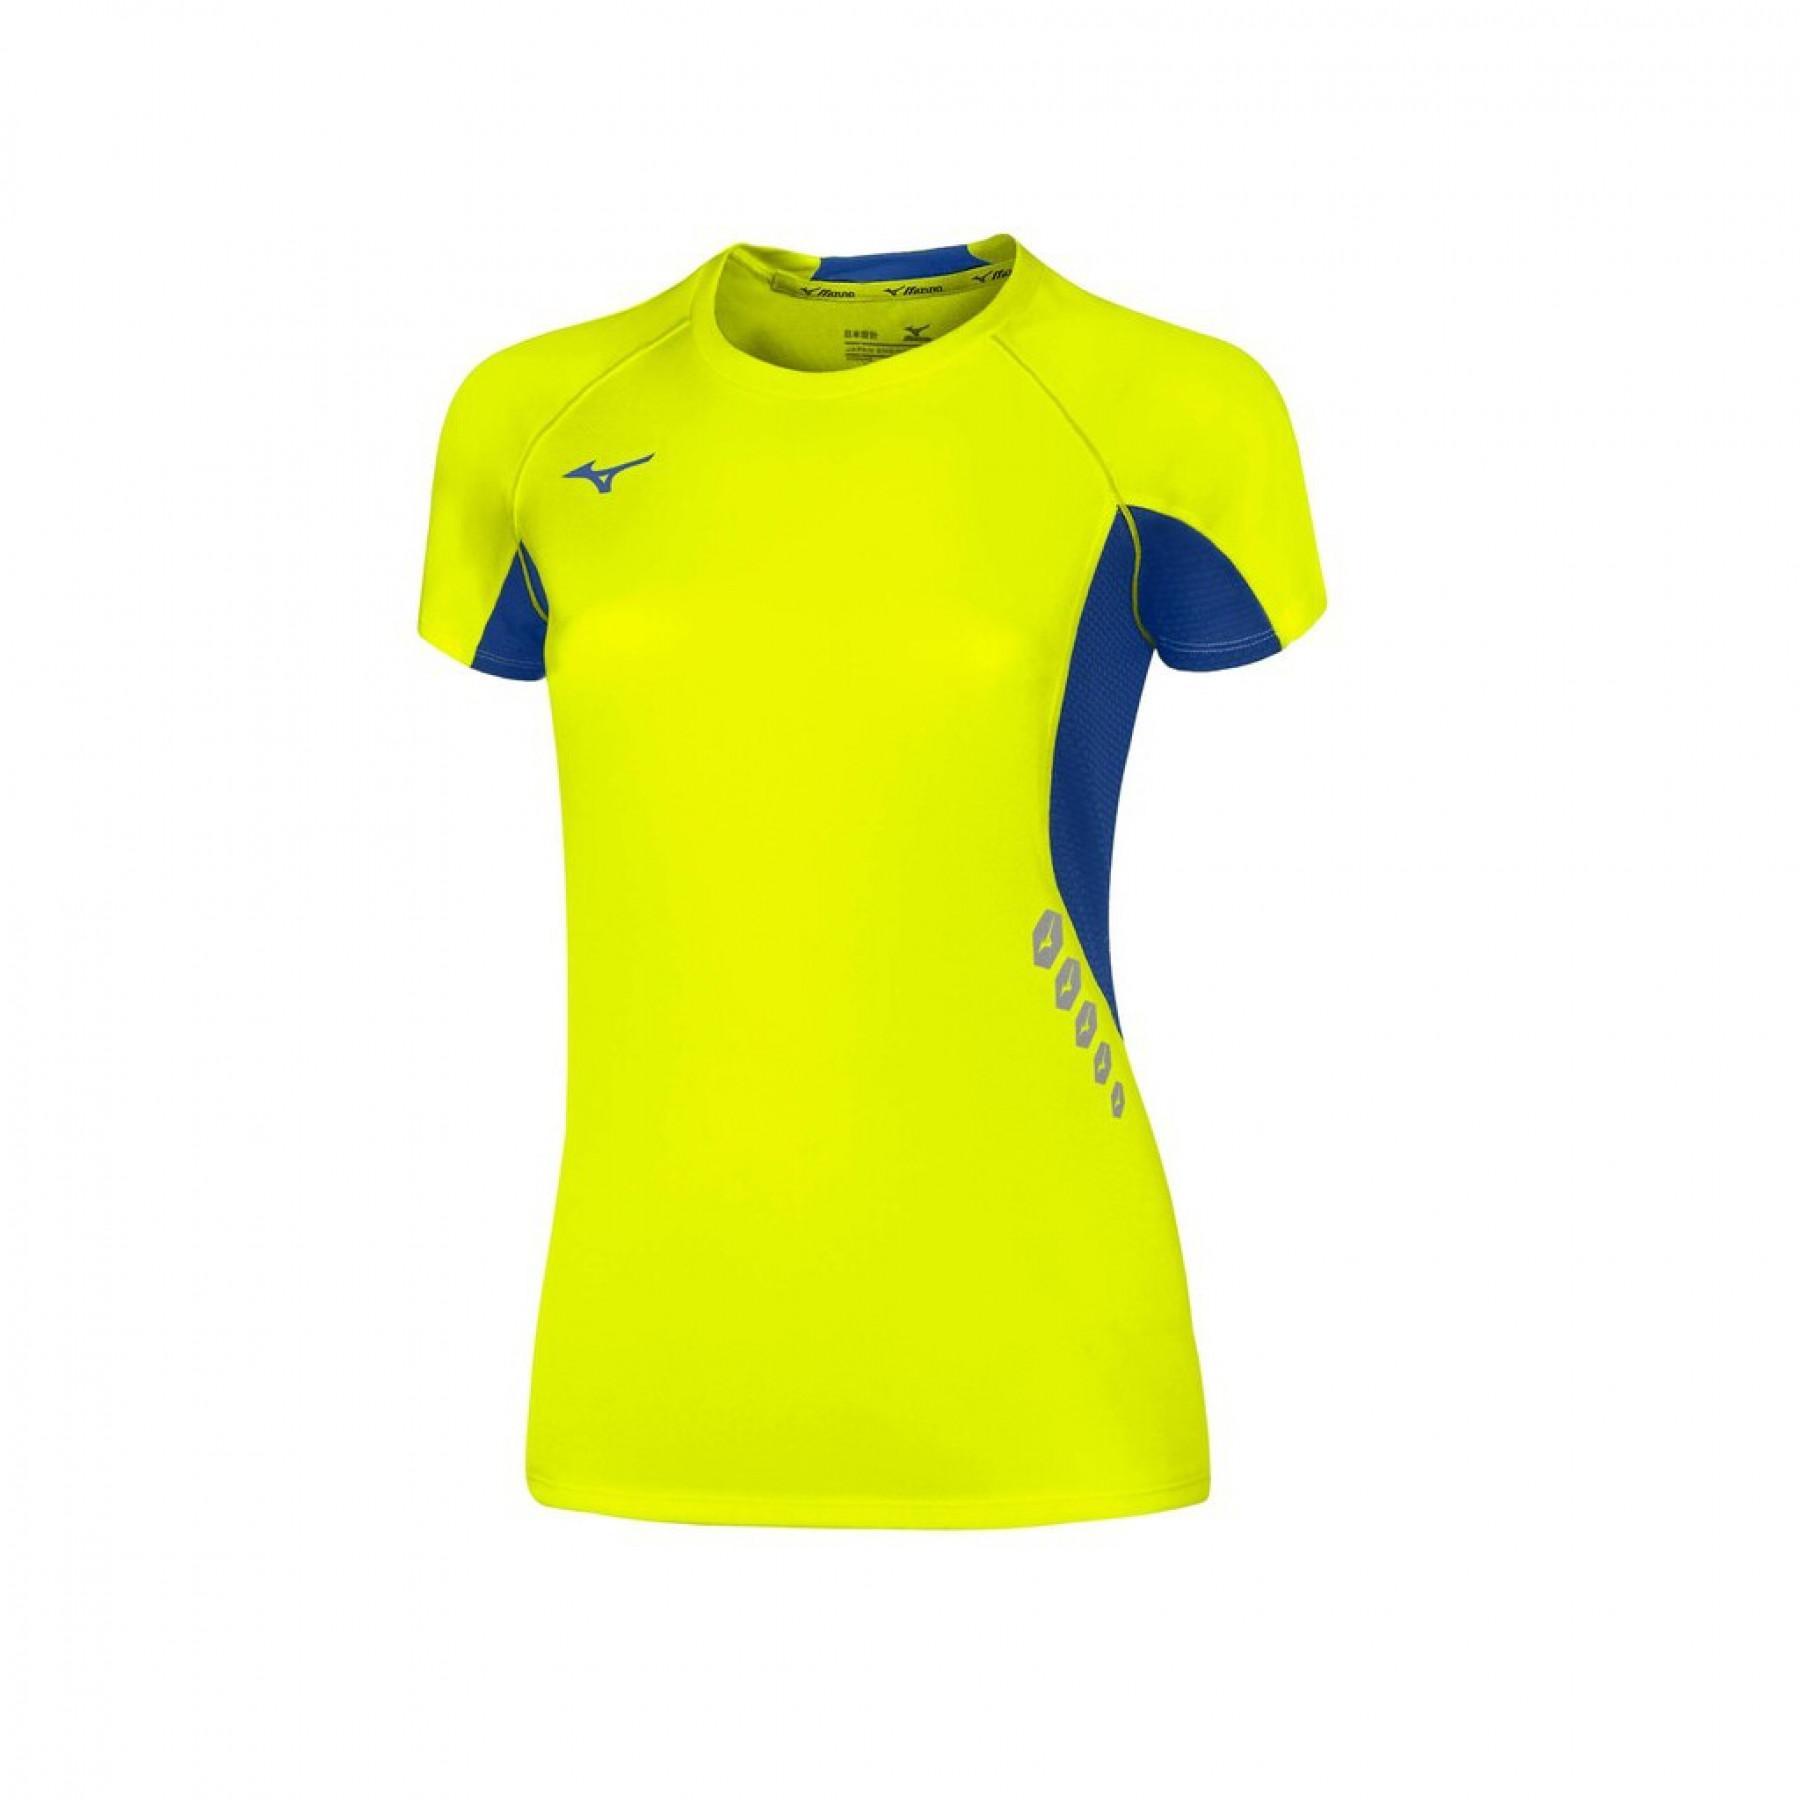 New Balance Accelerate - Coral - Camiseta Running Mujer talla XS